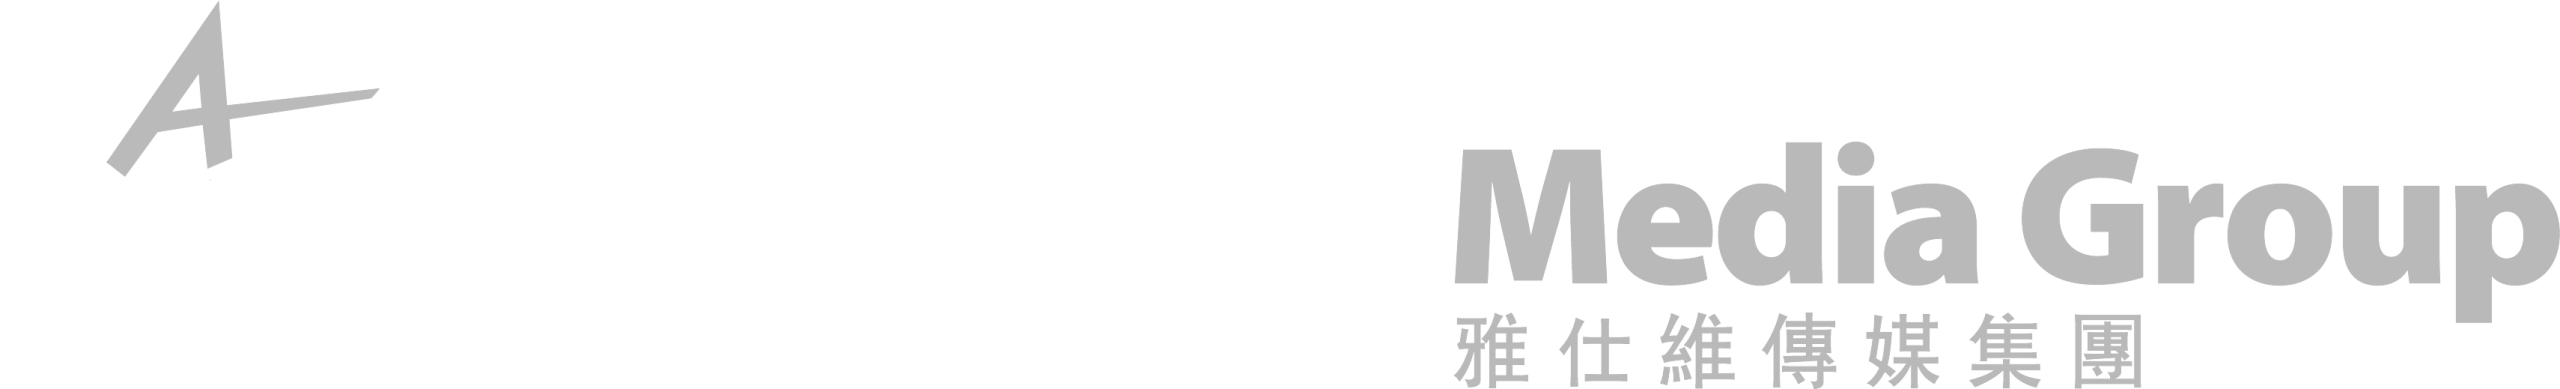 Asiaray Media Groupロゴ 